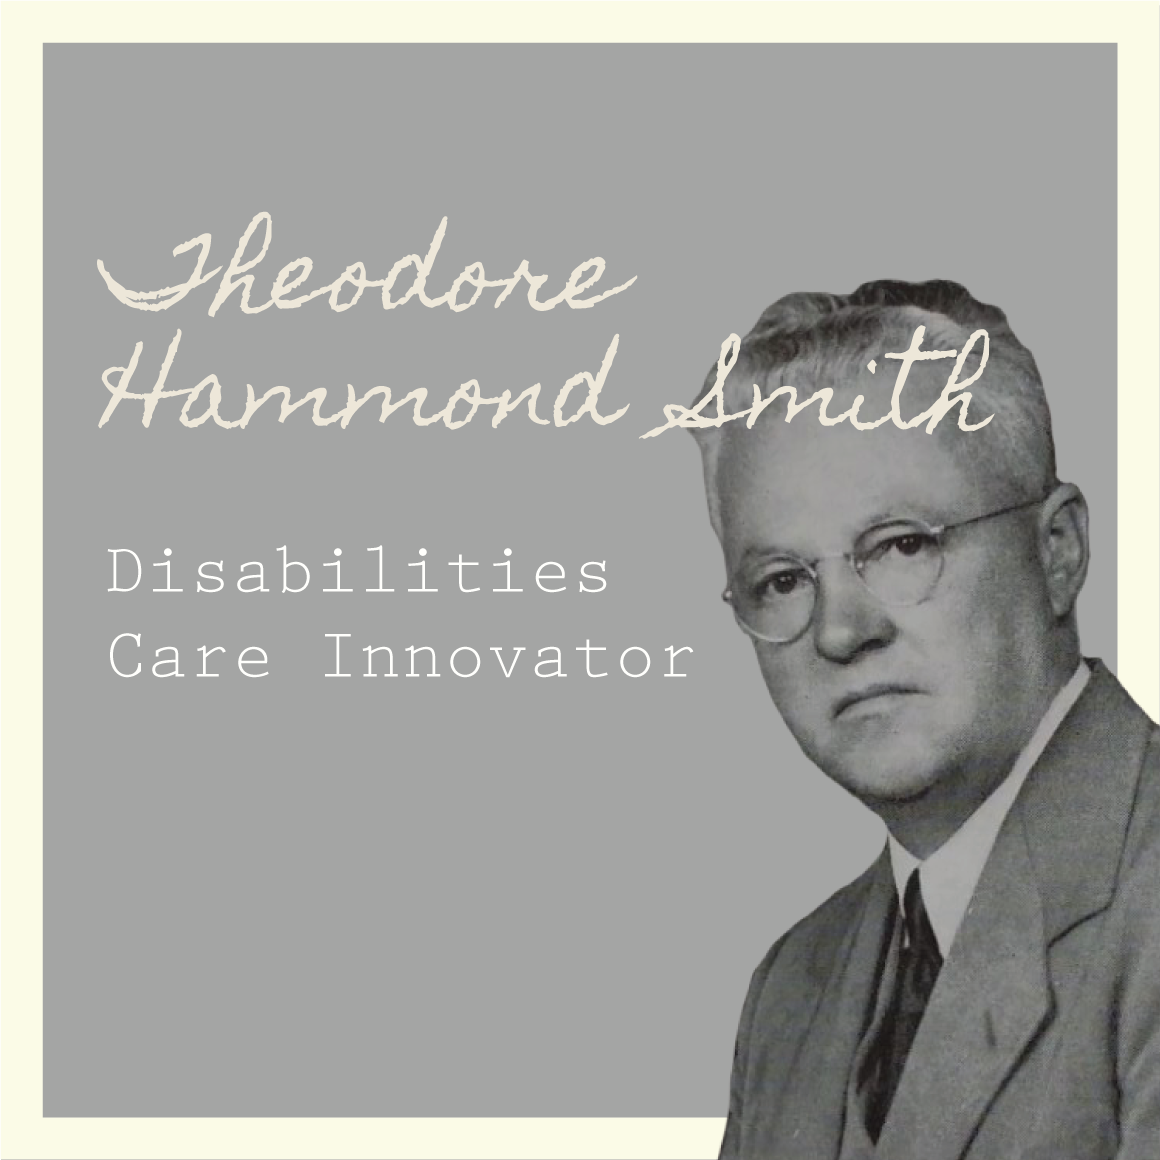 Theodore Hammond Smith: Disabilities Care Innovator